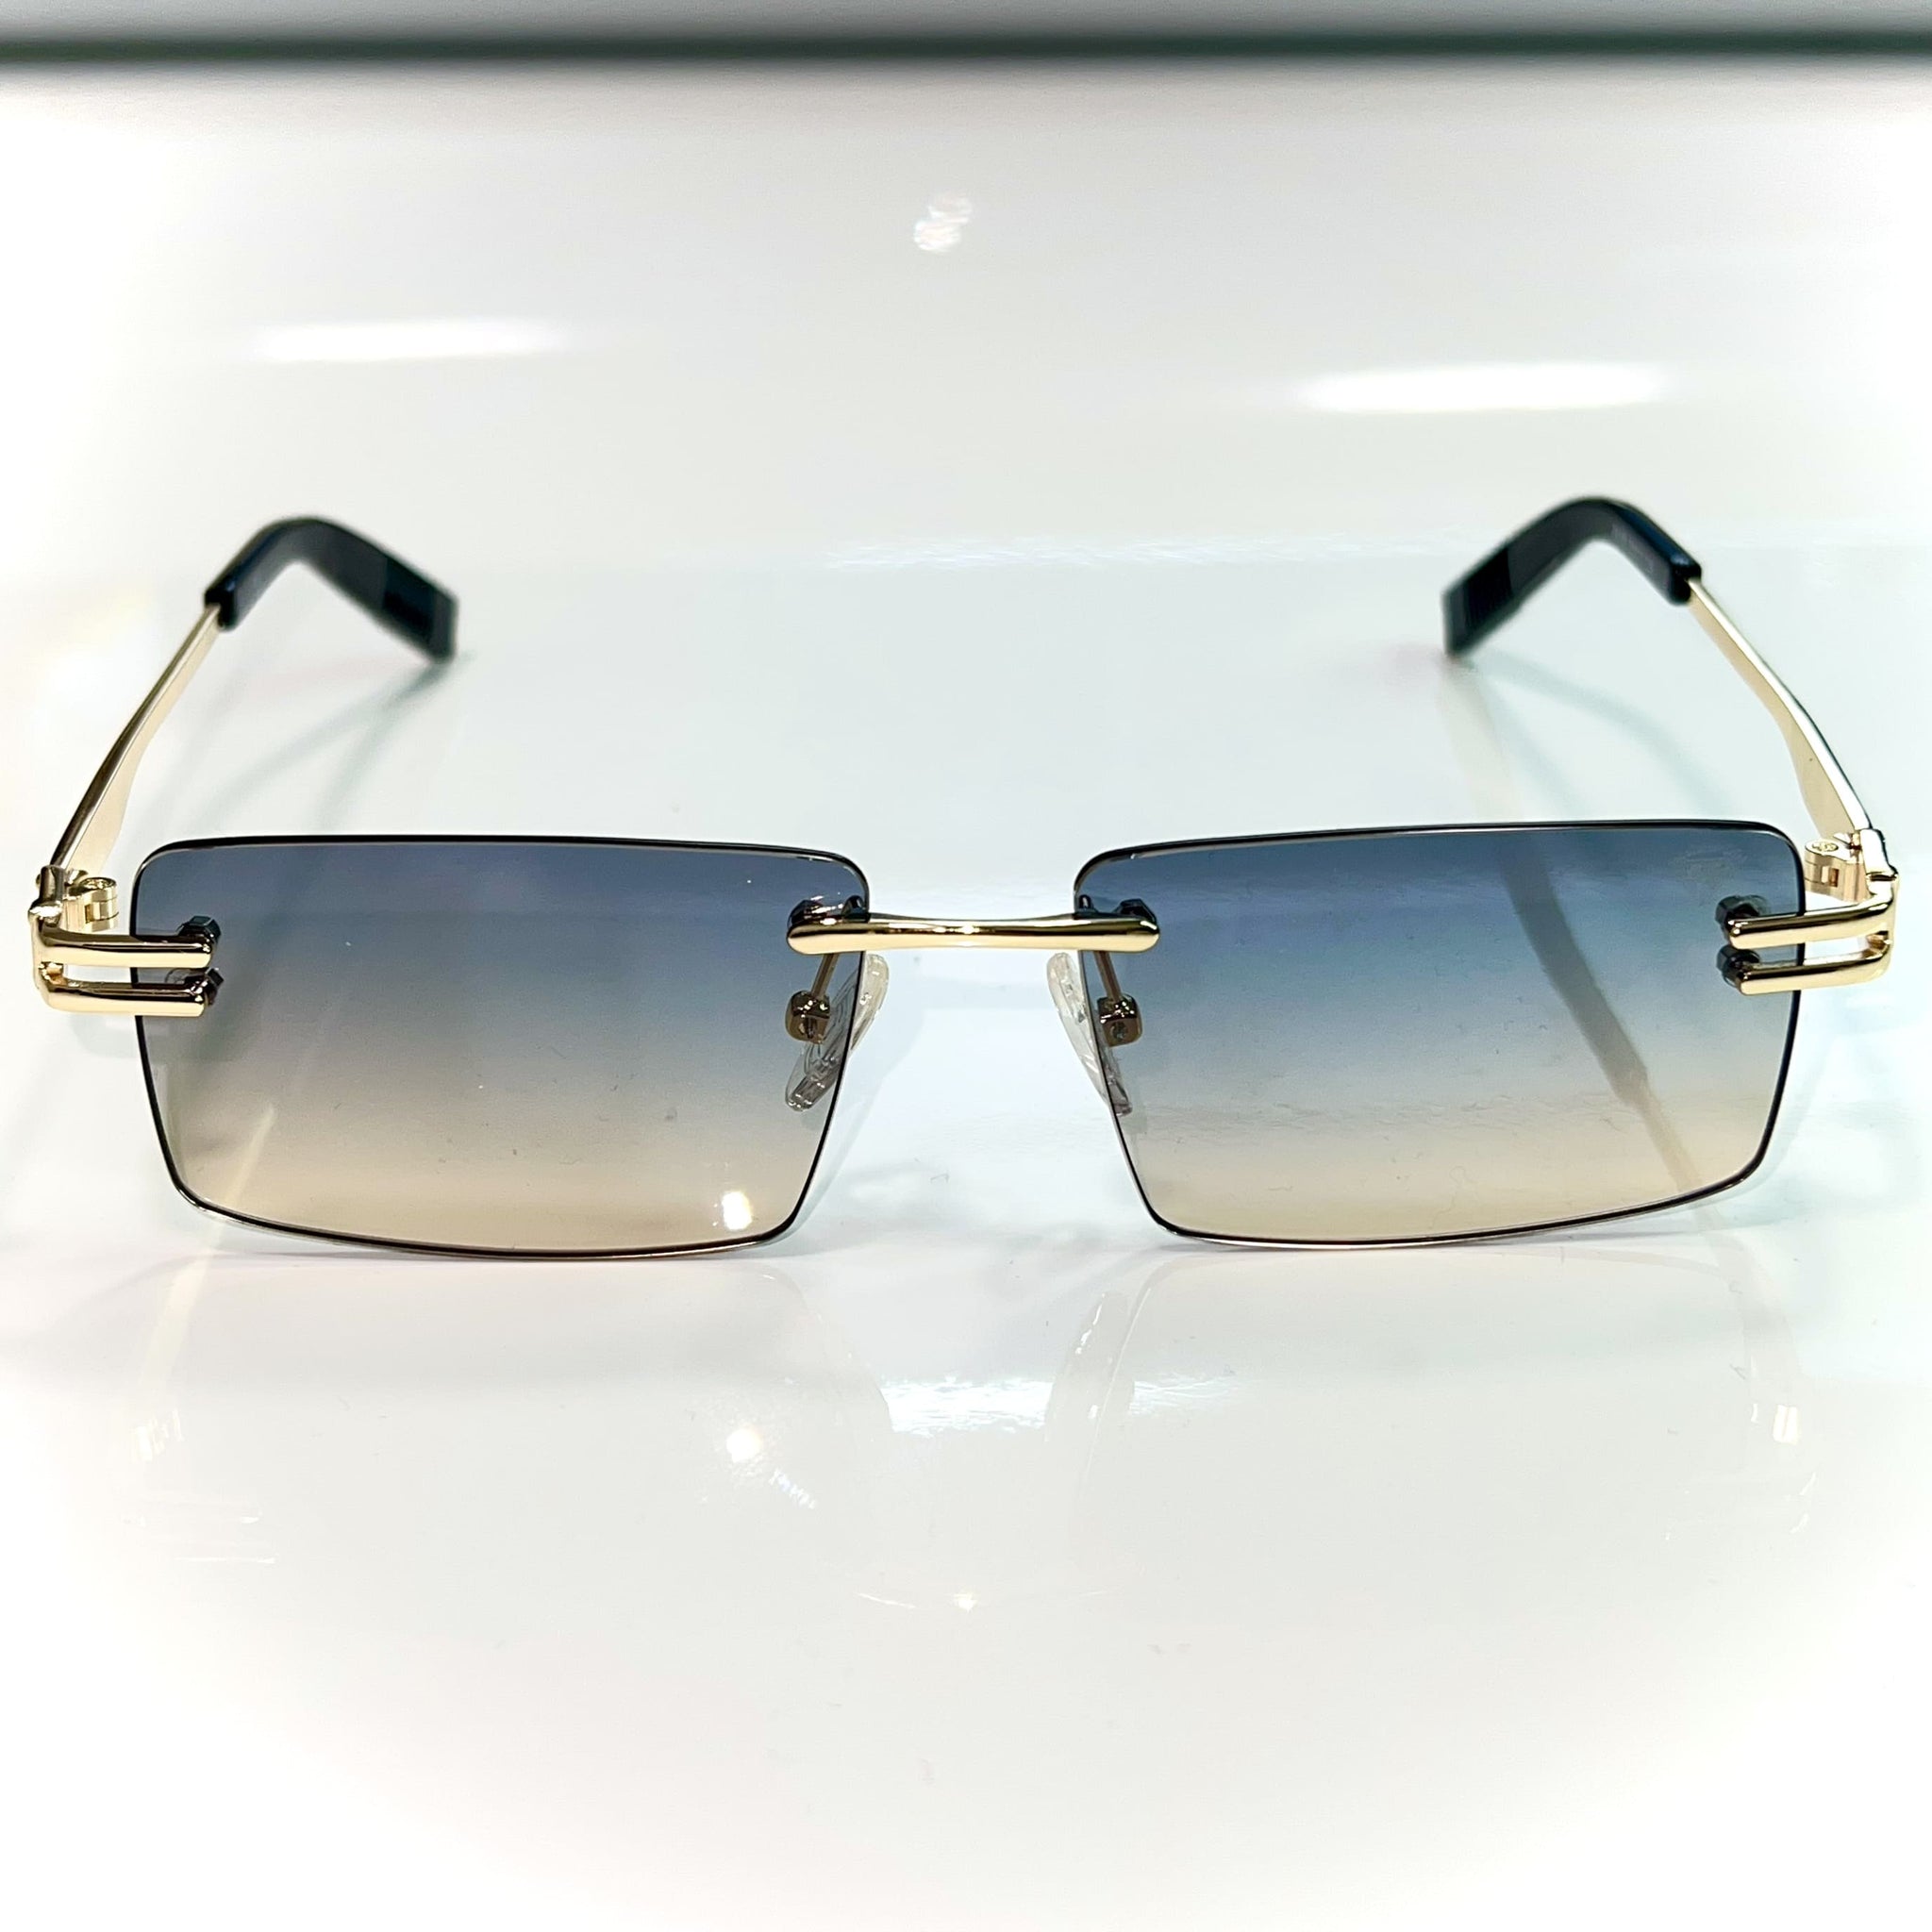 Sehgal Premium Glasses - Blue / Creme Shade - Silver Frame